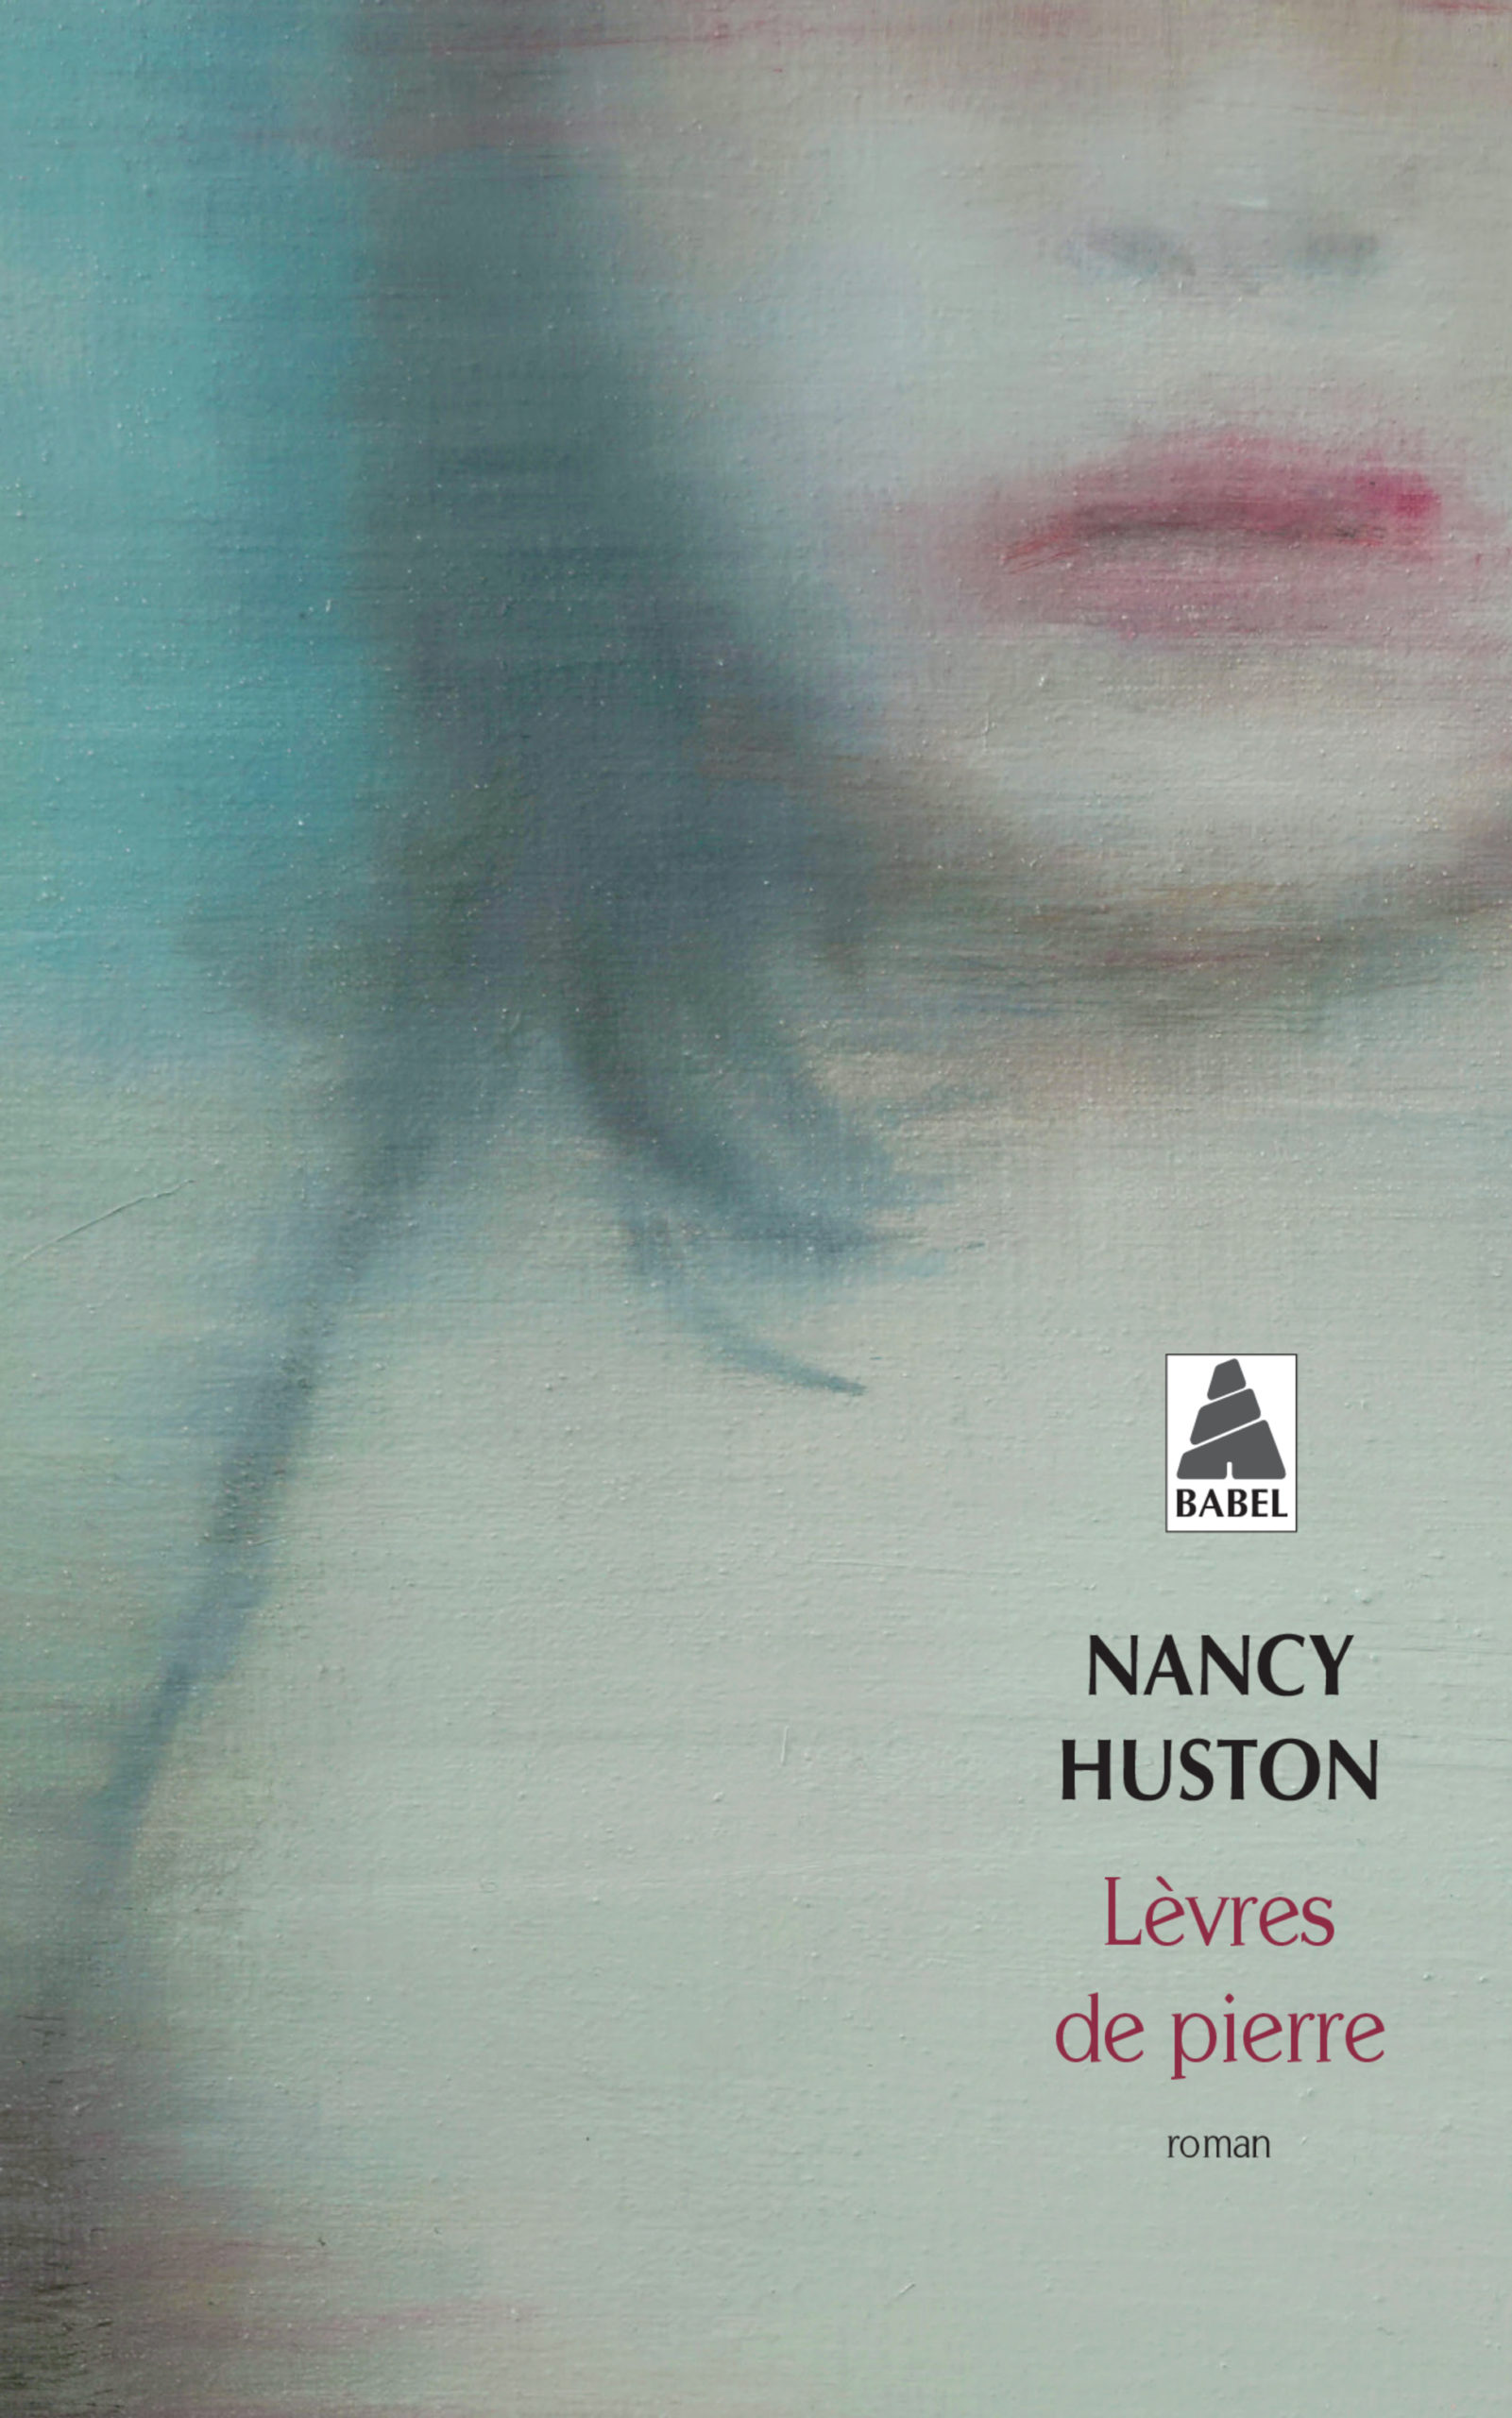 Lèvres de pierre de Nancy Huston sort en poche.